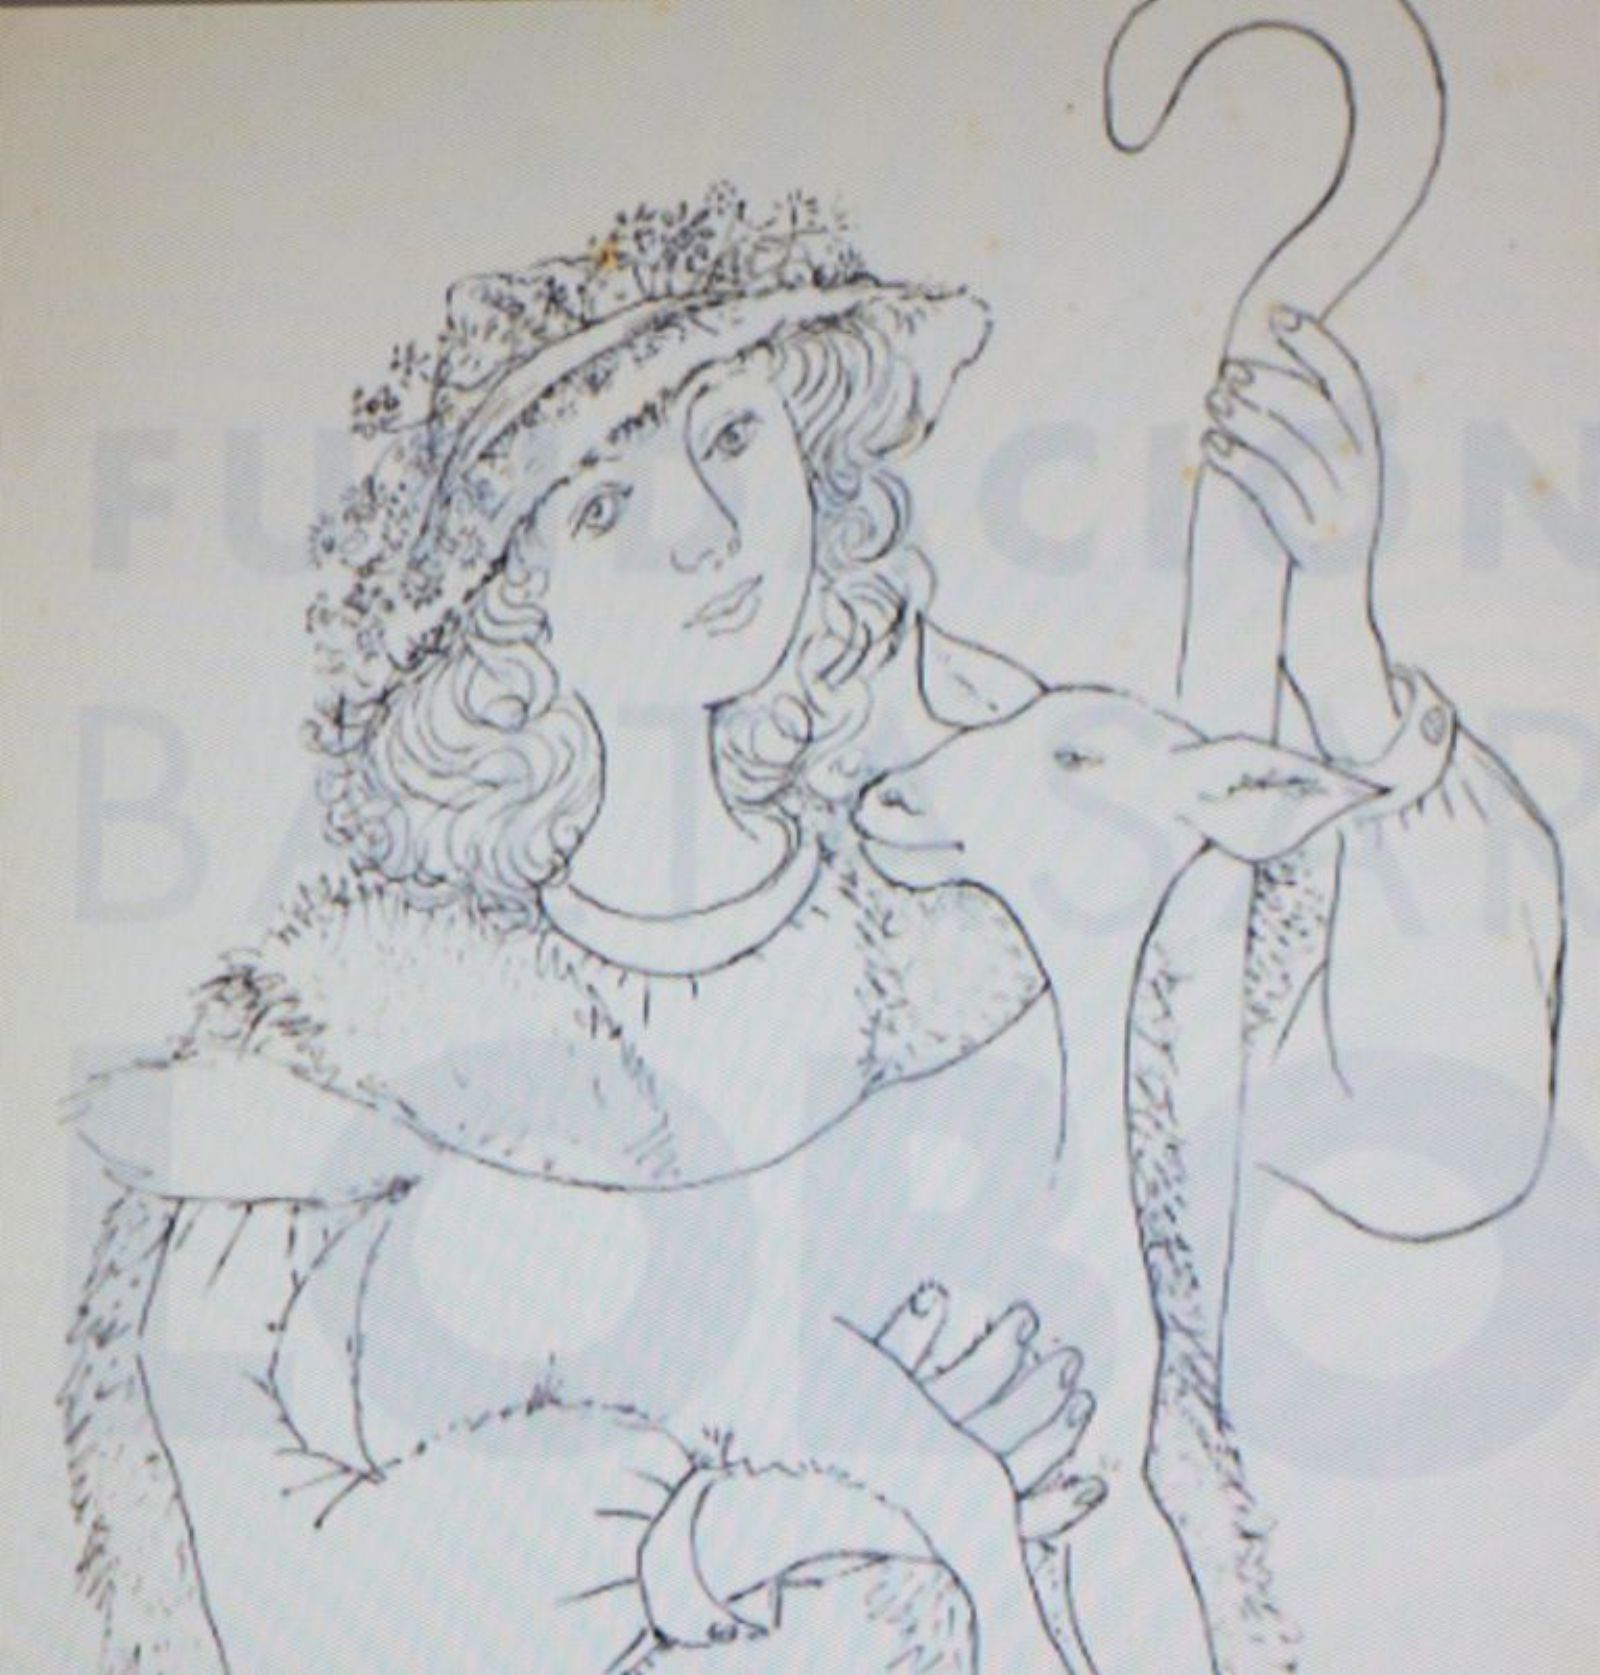 Dibujo a plumilla de una joven pastora con su cordero.